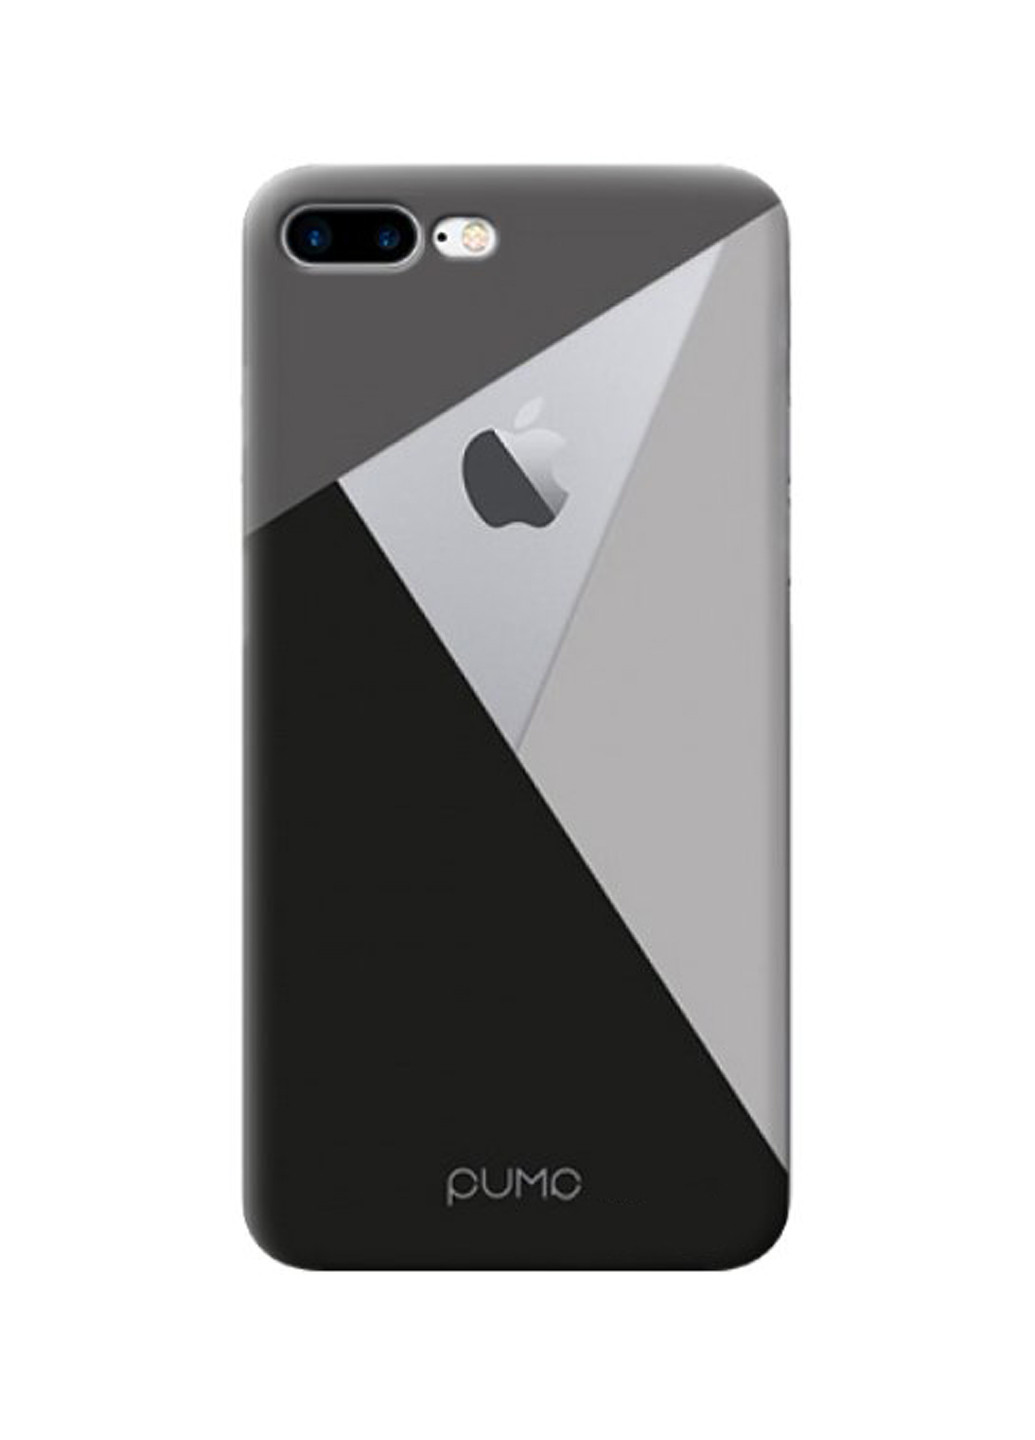 Чехол Transperency Case for iPhone 8 Plus/7 Plus Black/Gray Pump transperency case для iphone 8 plus/7 plus black/gray (136993558)